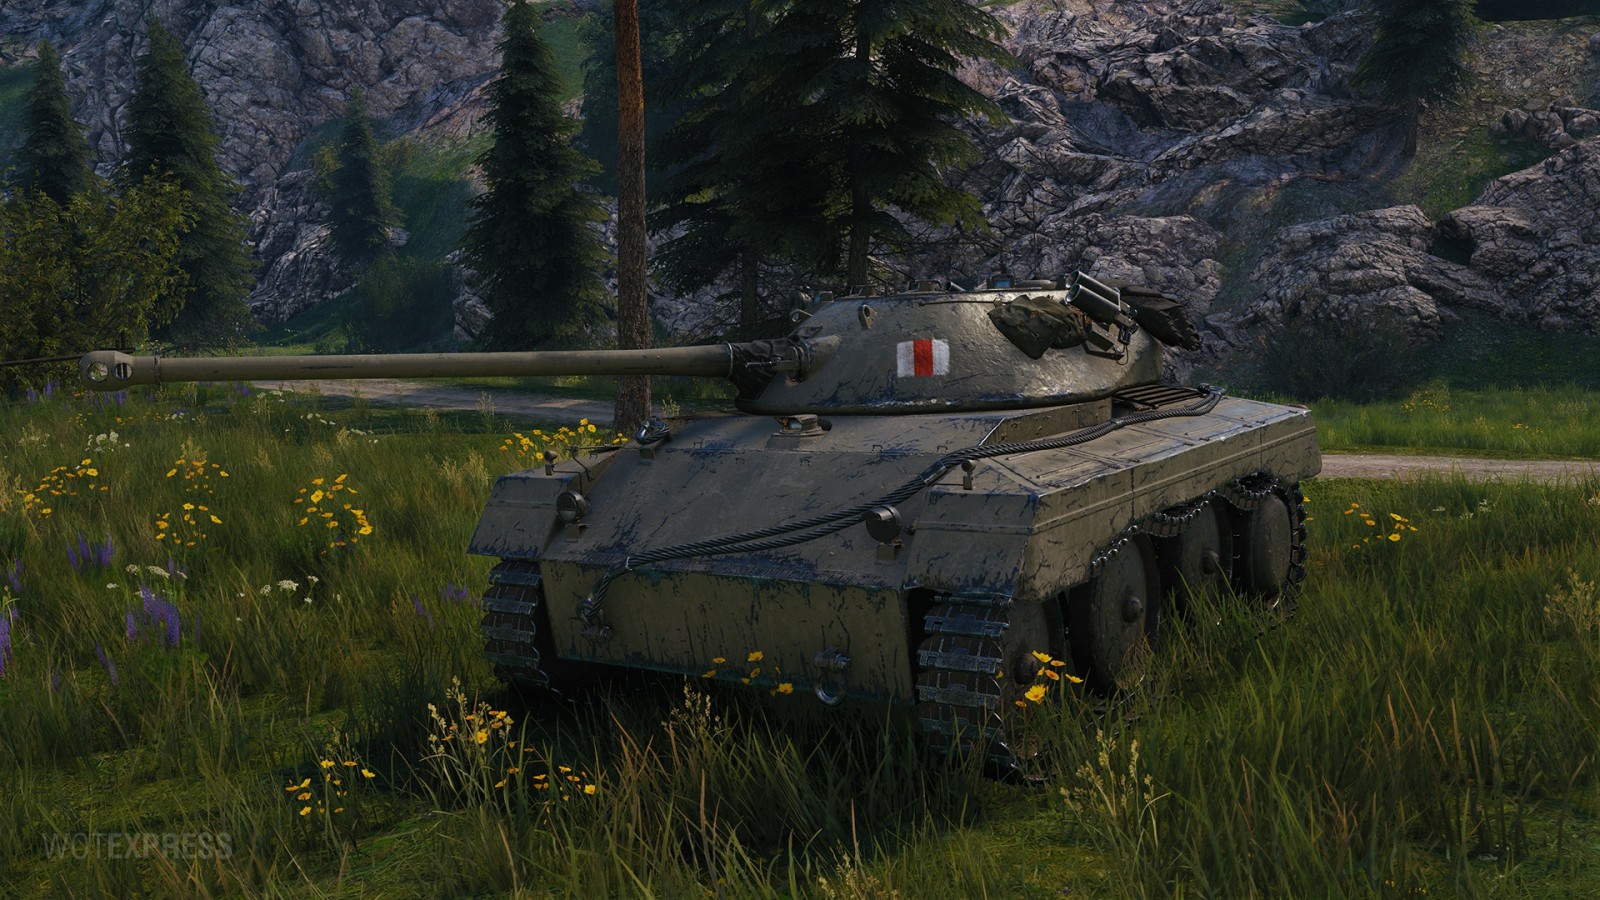 Скриншоты танка A46 в World of Tanks.